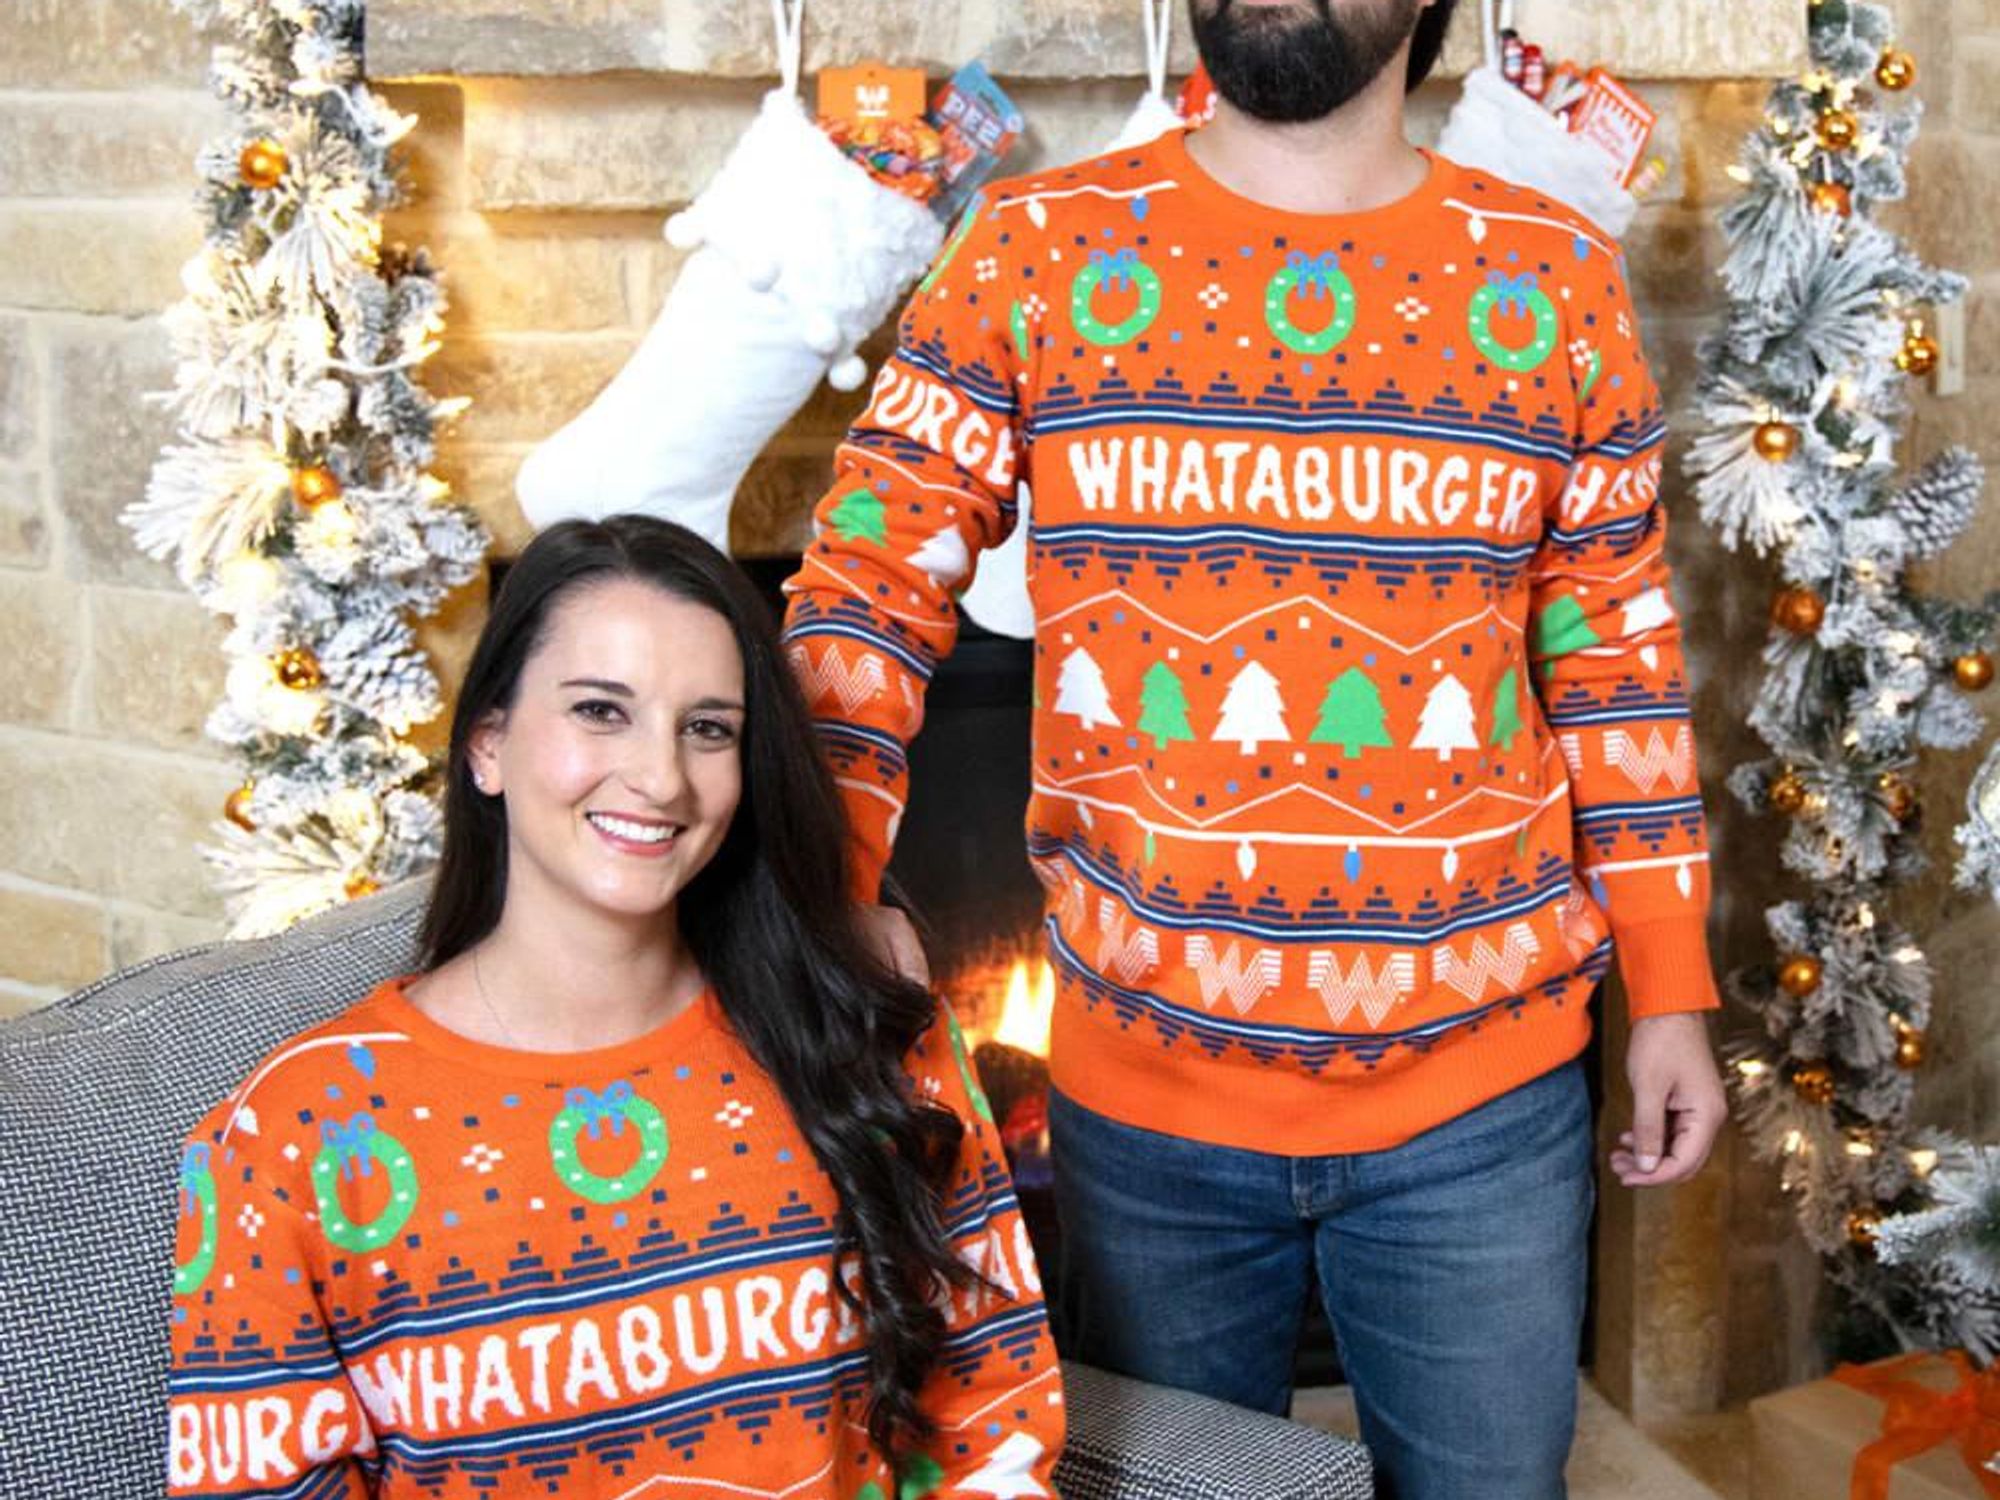 Whataburger apparel holiday 2020 sweater socks hatWhataburger apparel holiday 2020 sweater socks hat